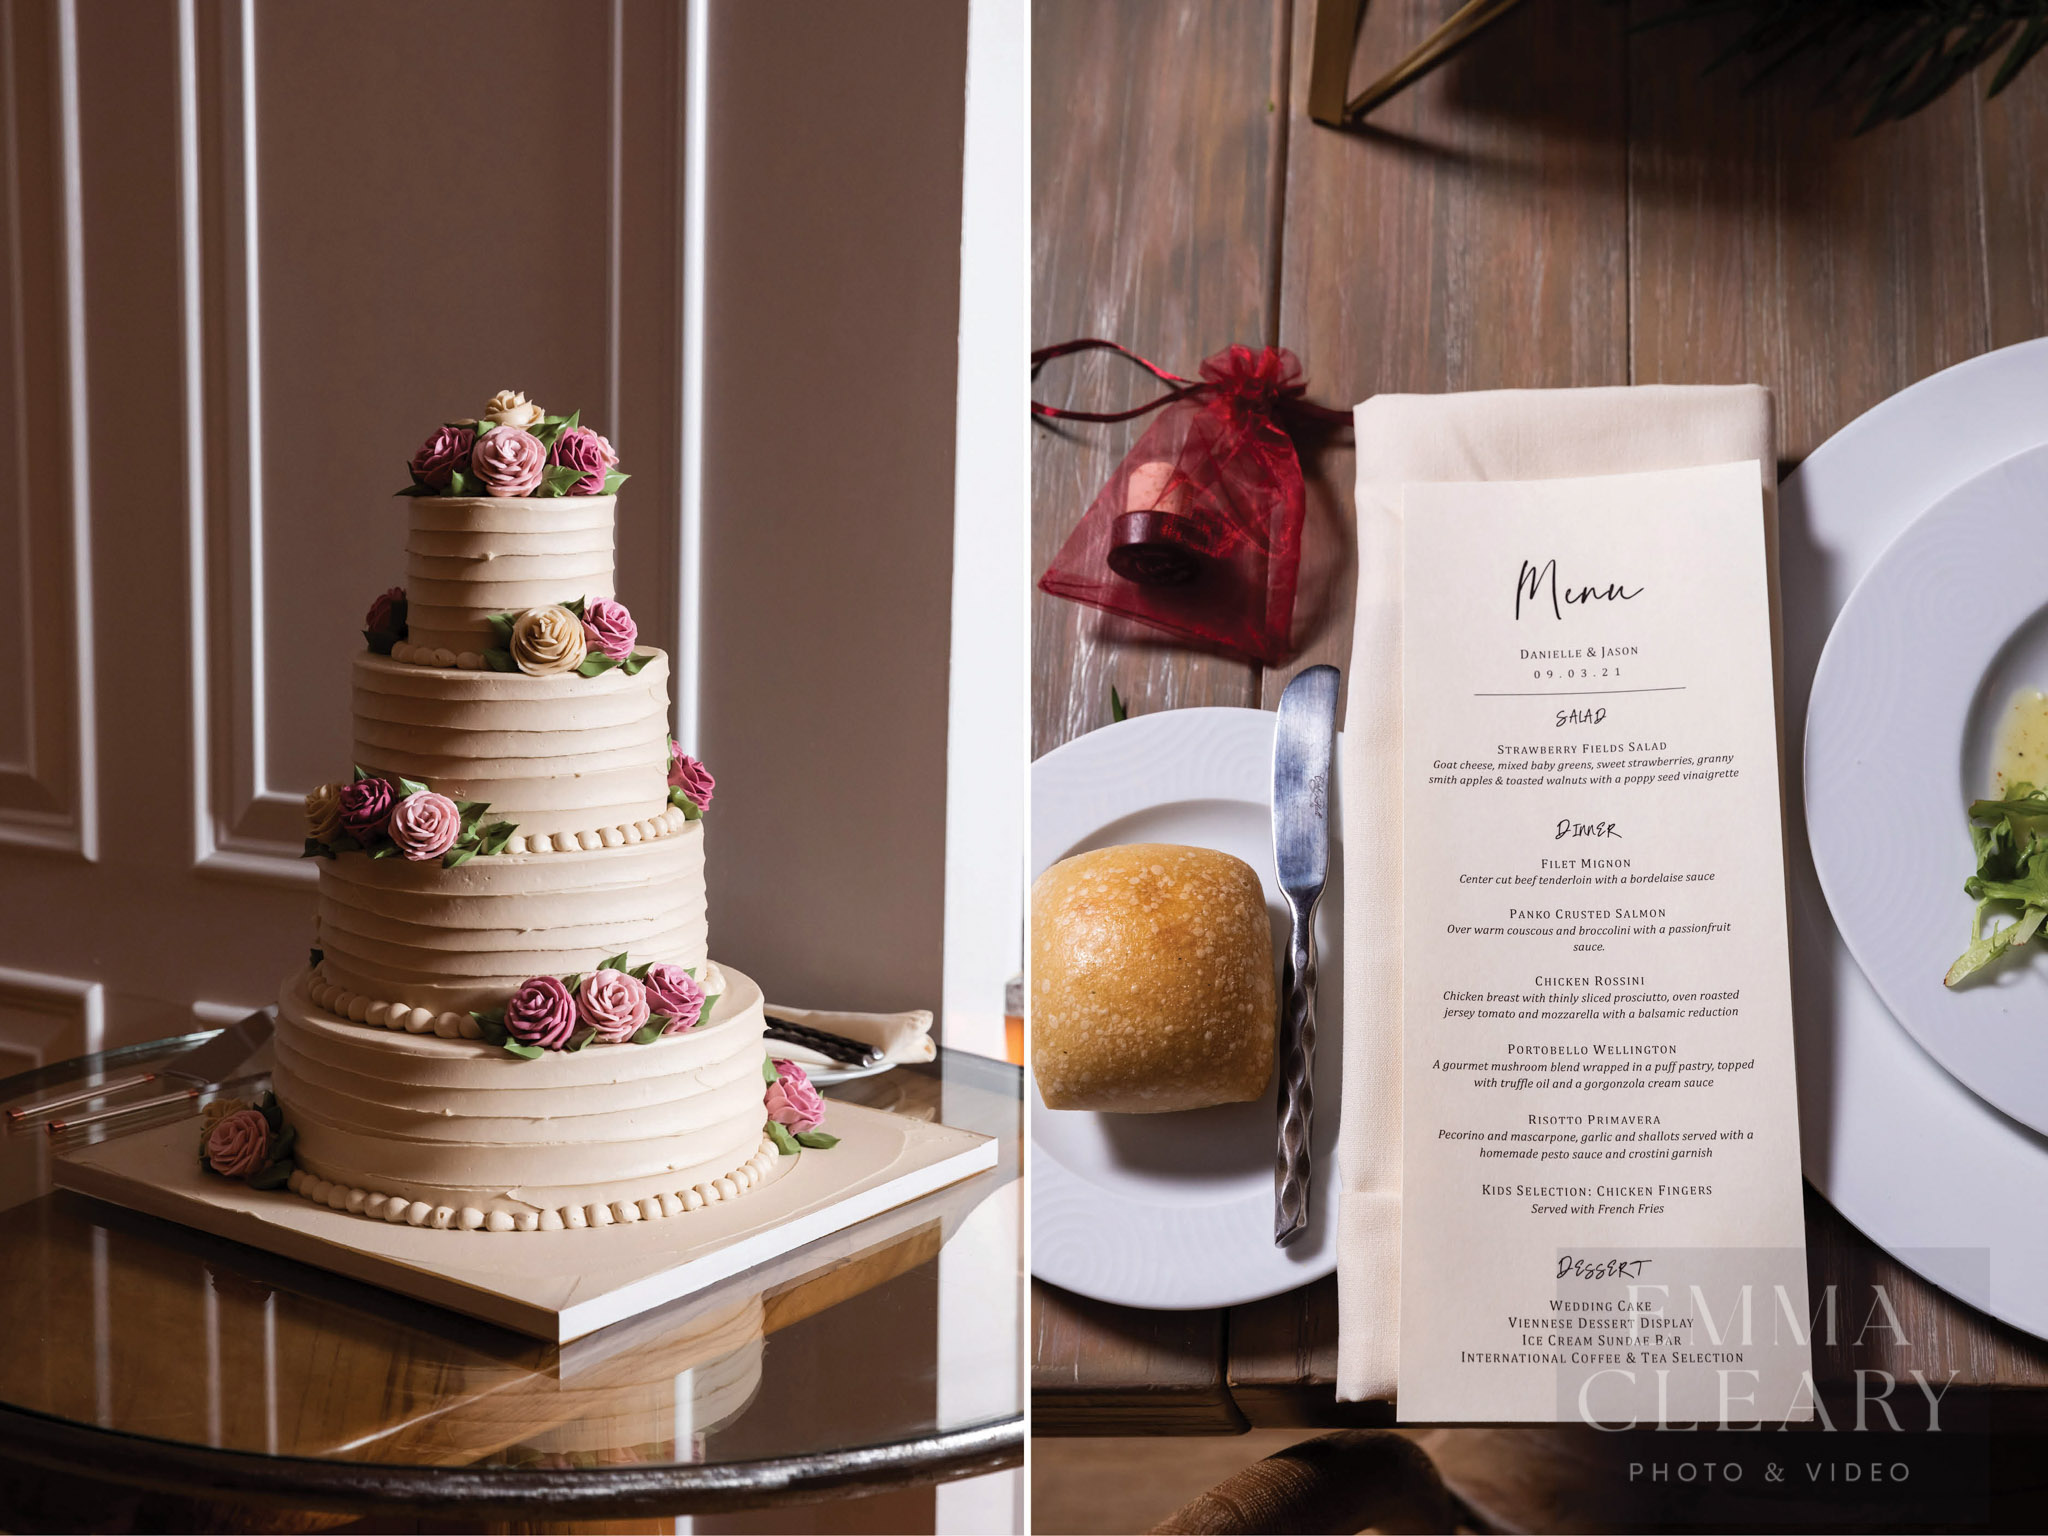 Wedding cake and menu